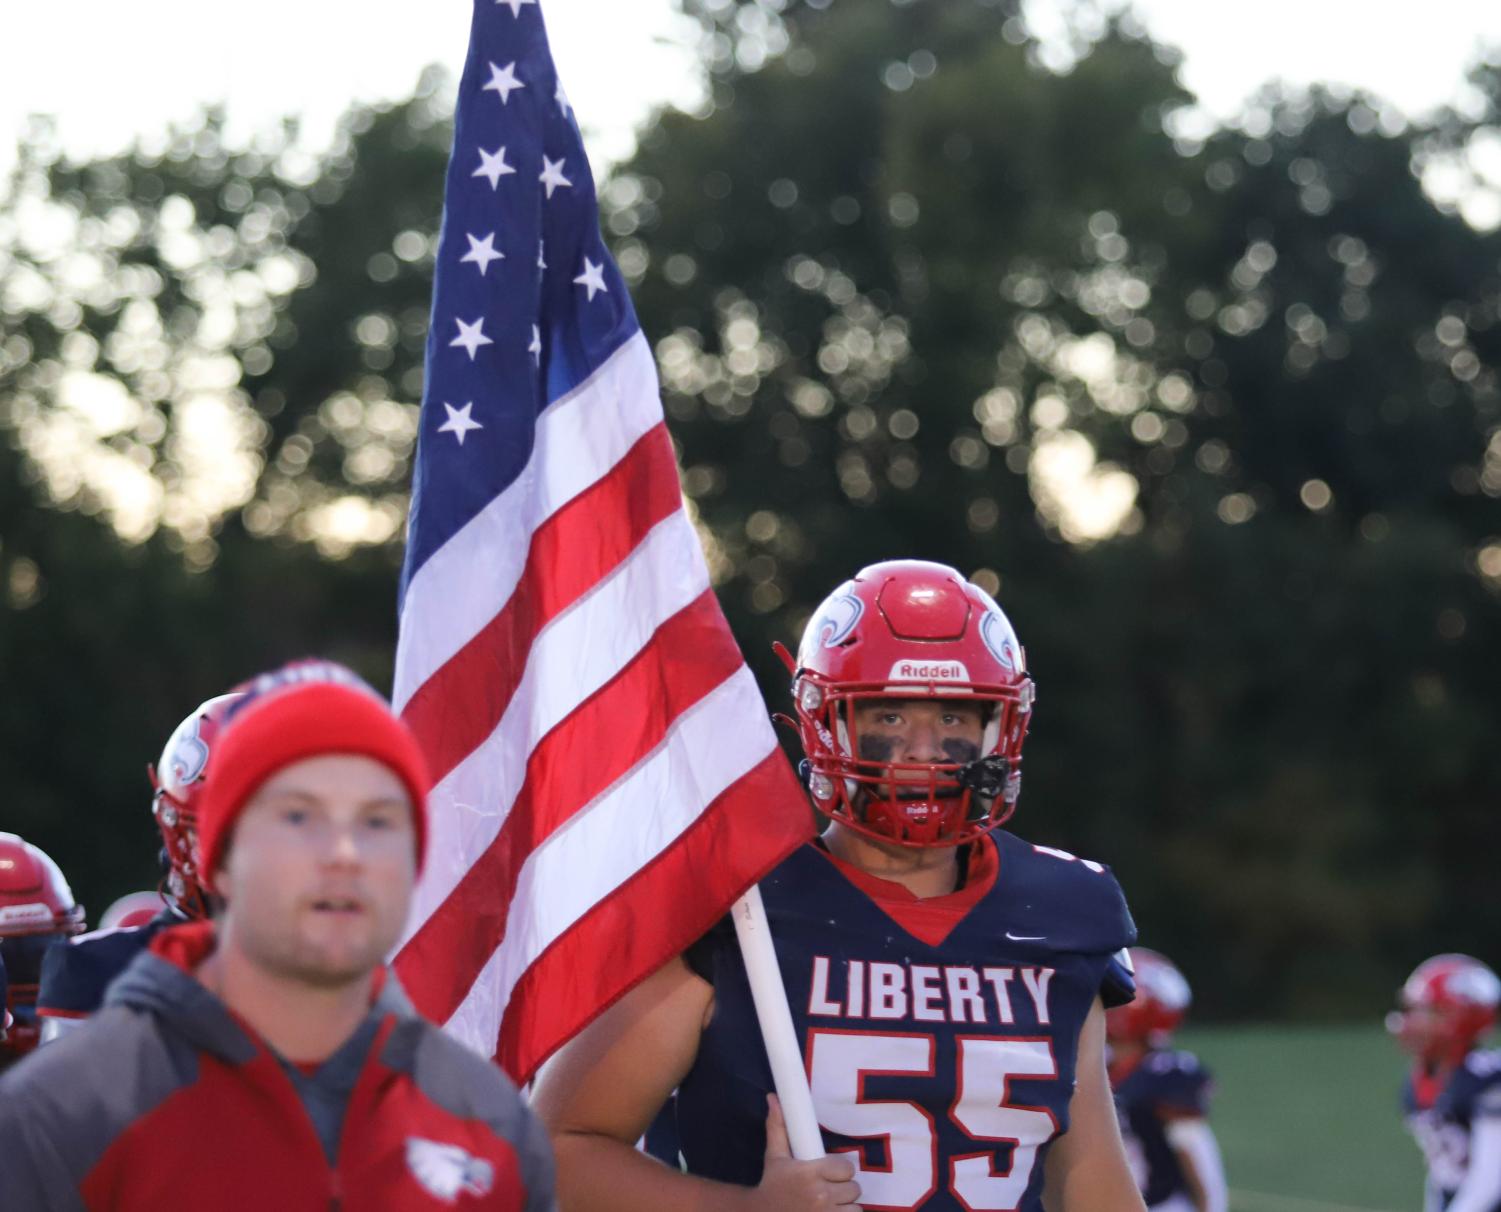 Local high schools start flag football teams, LHS wins first game